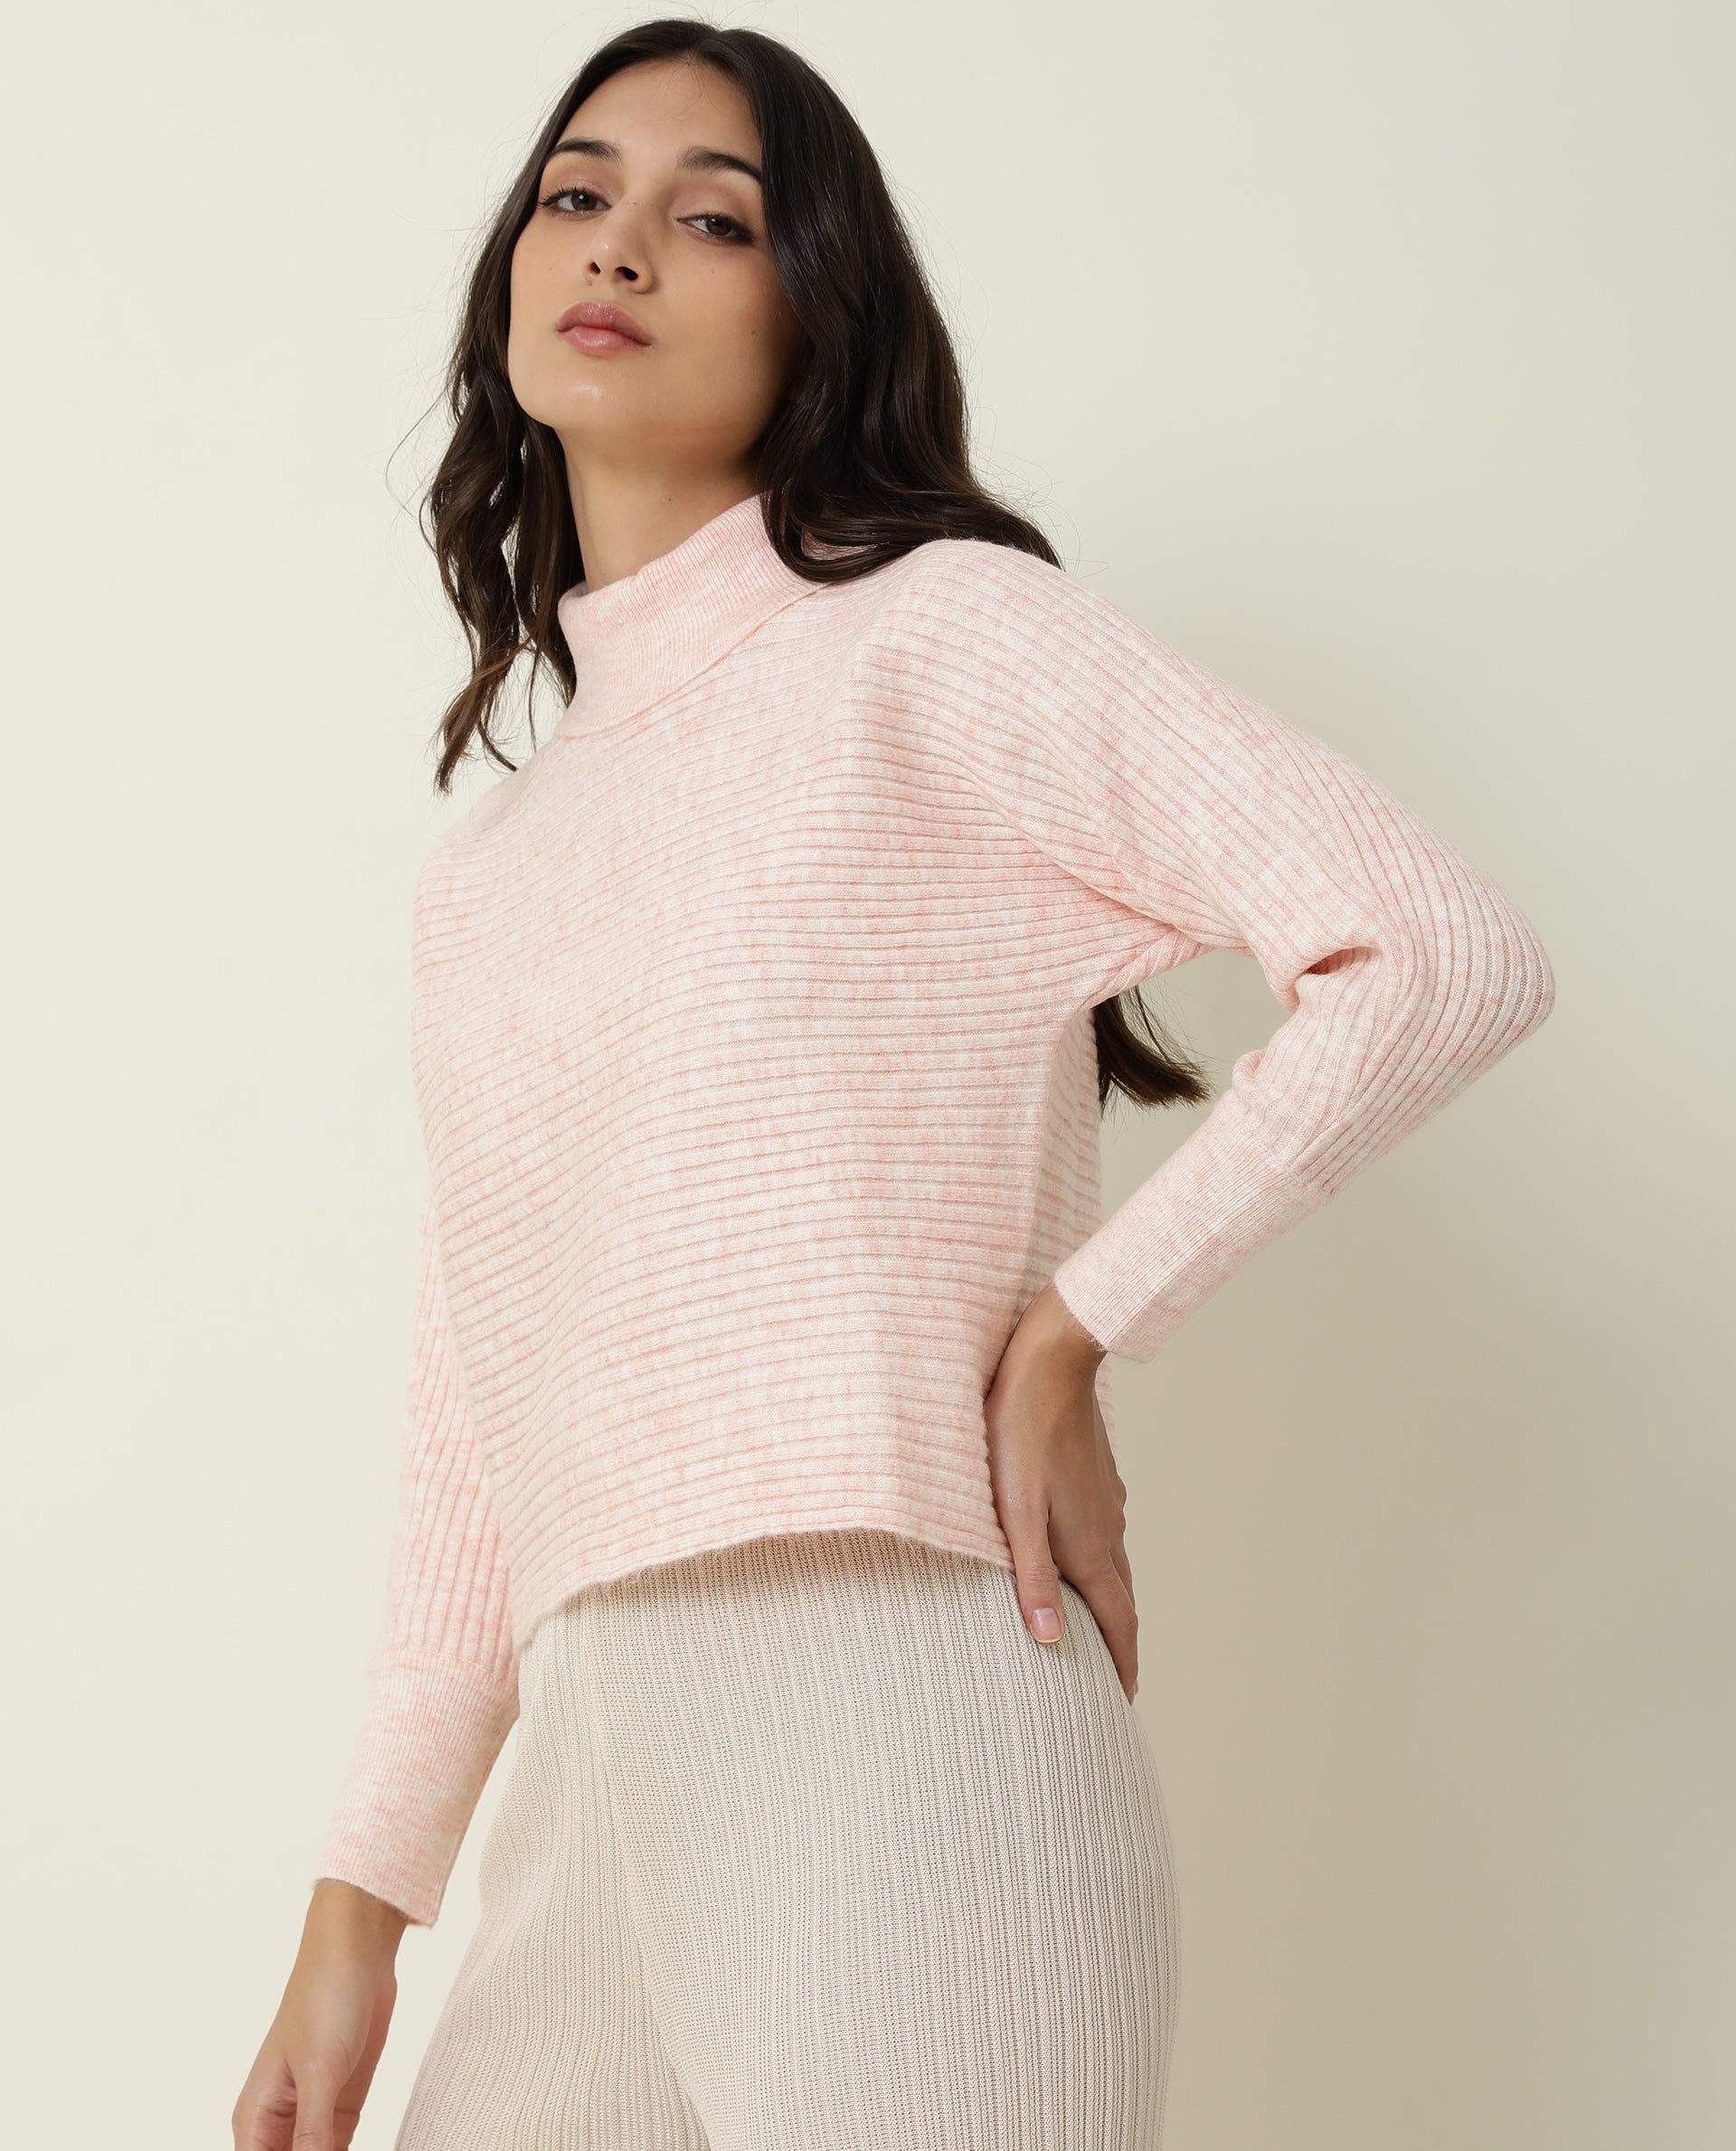 Bont recept advies Buy Pink Sweater For Women Online 8907279456847 At Rareism